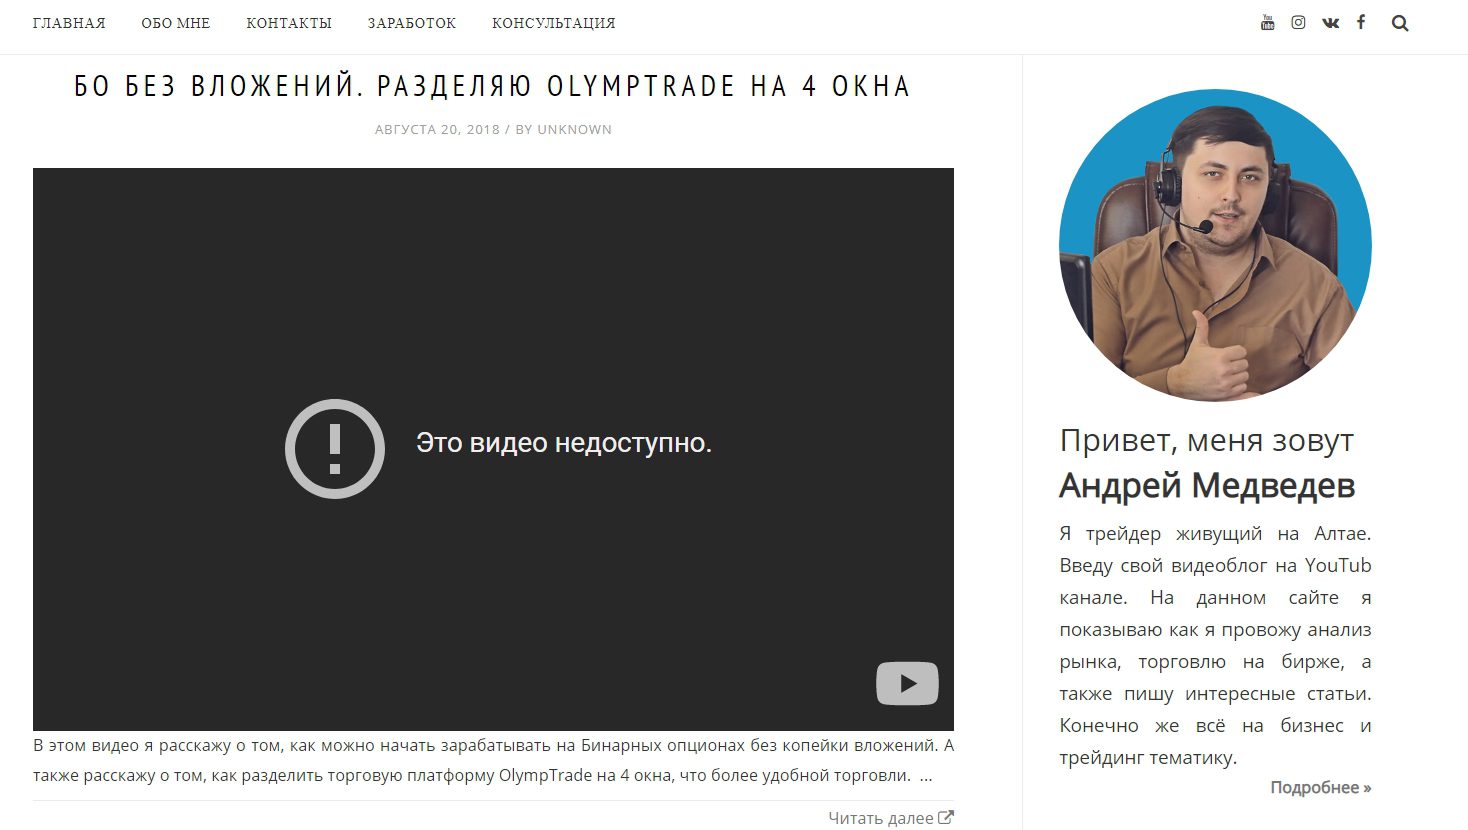 Сайт трейдера Андрея Медведева